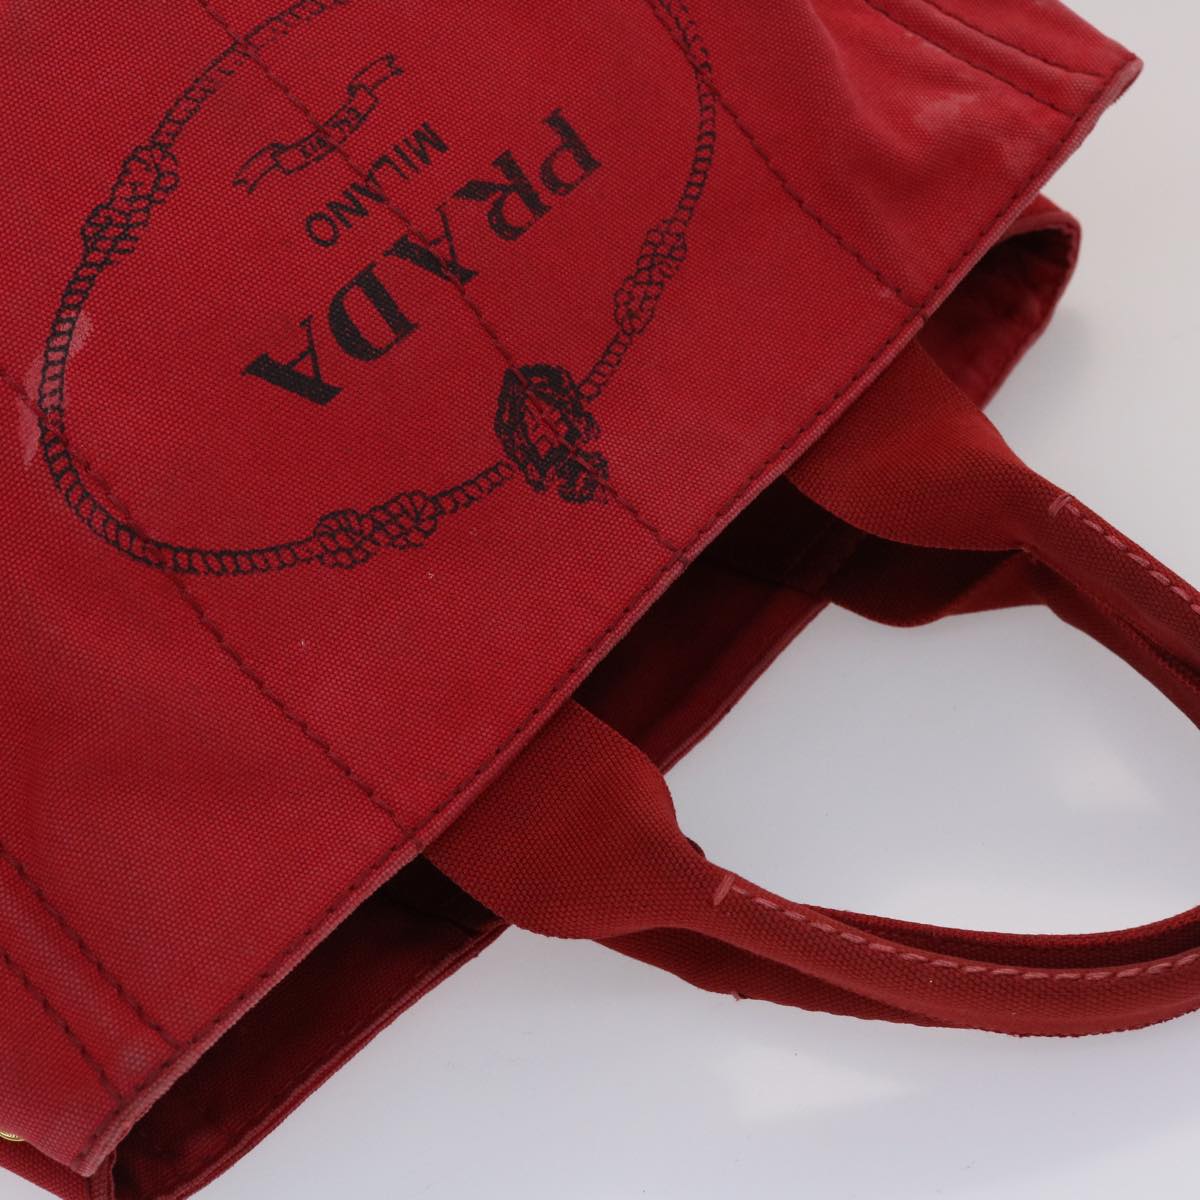 PRADA Canapa Hand Bag Canvas Red Auth ki3073